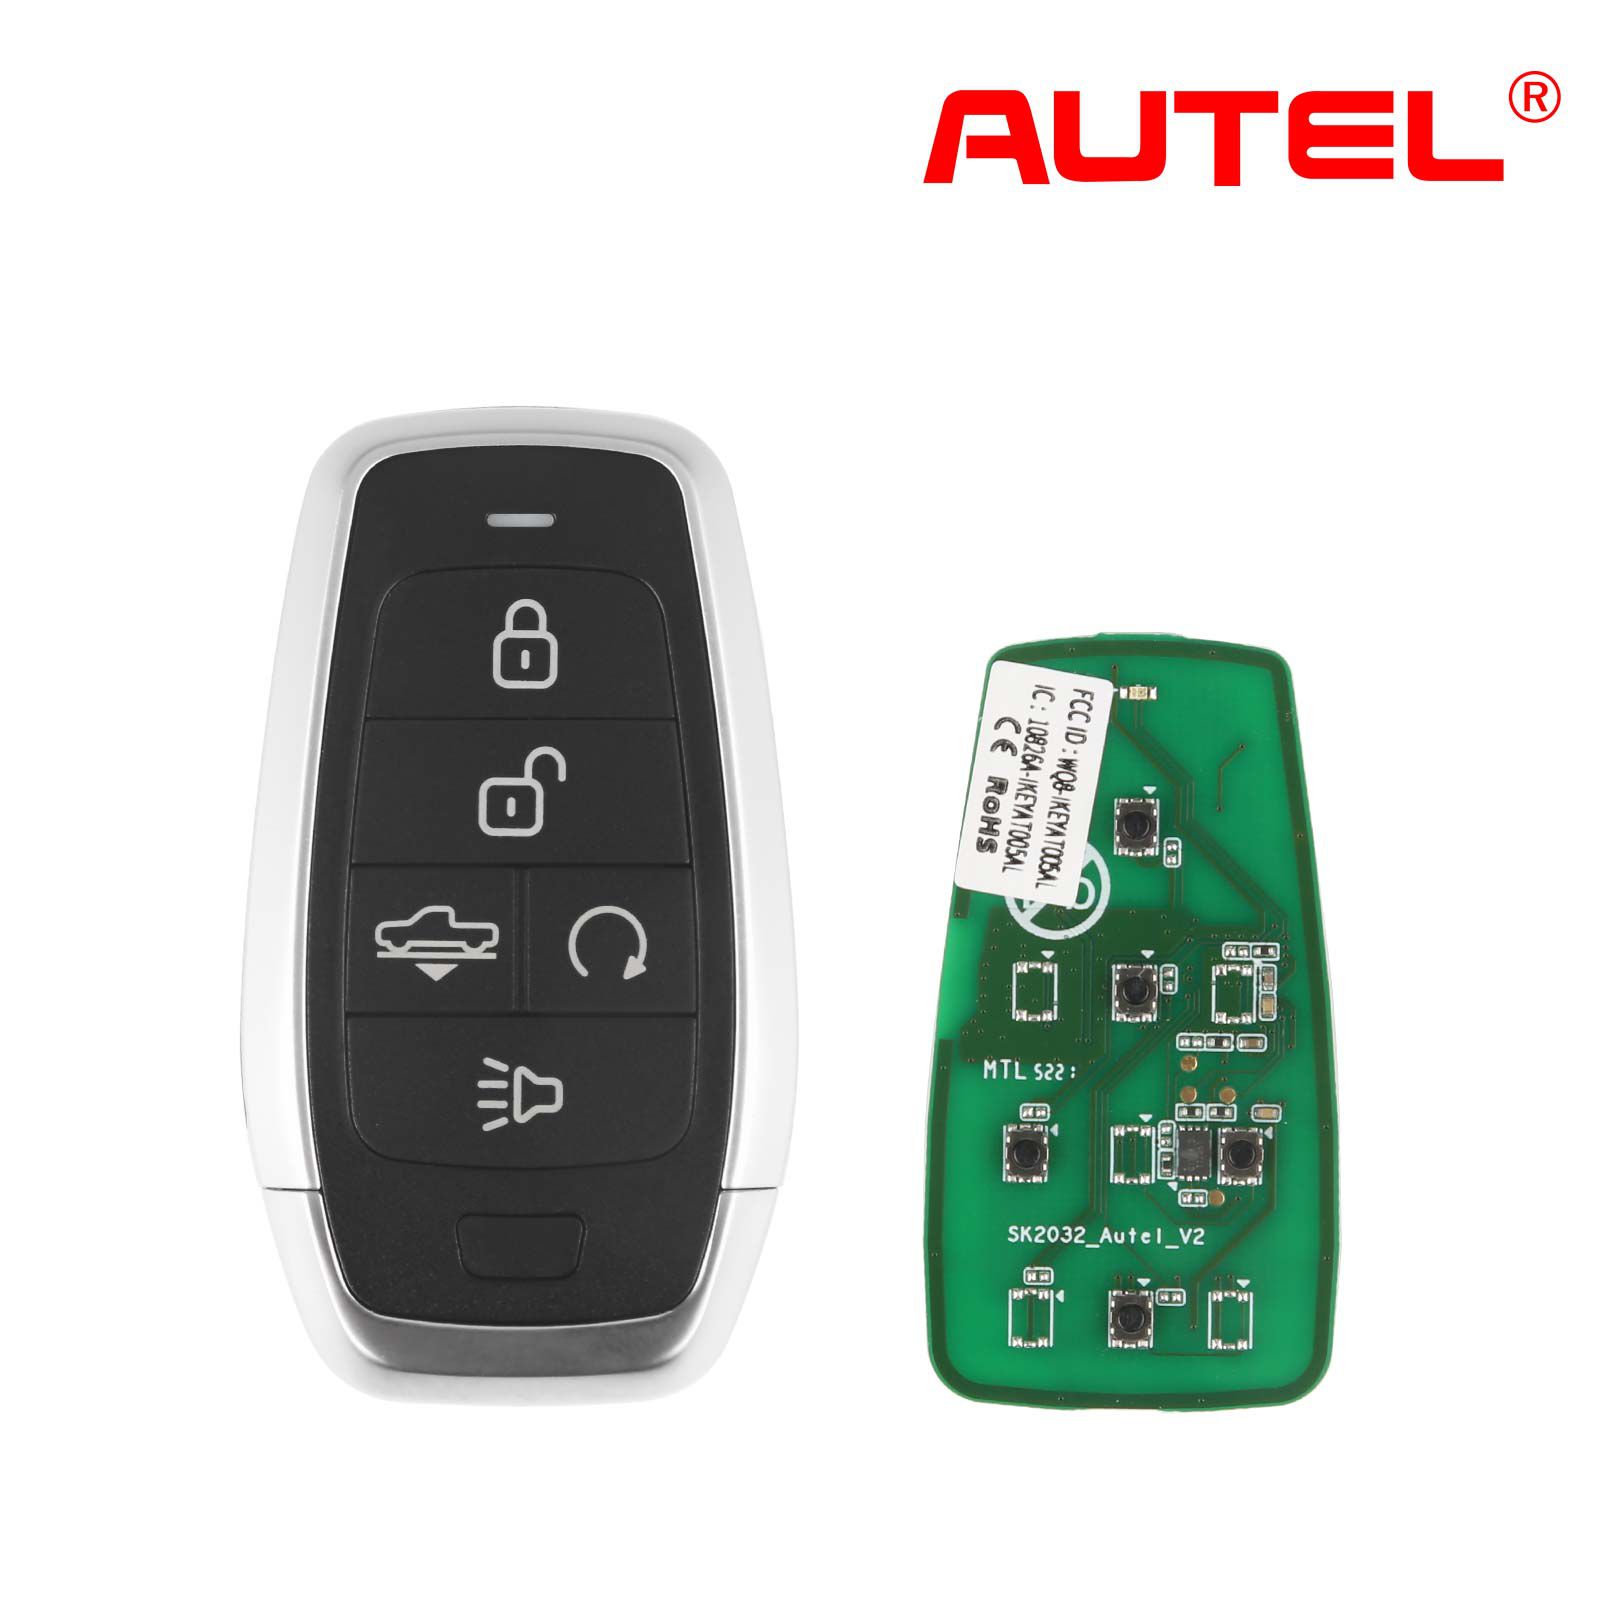 Autel ikeyat005al 5 botones clave inteligente universal independiente 5 piezas / lote